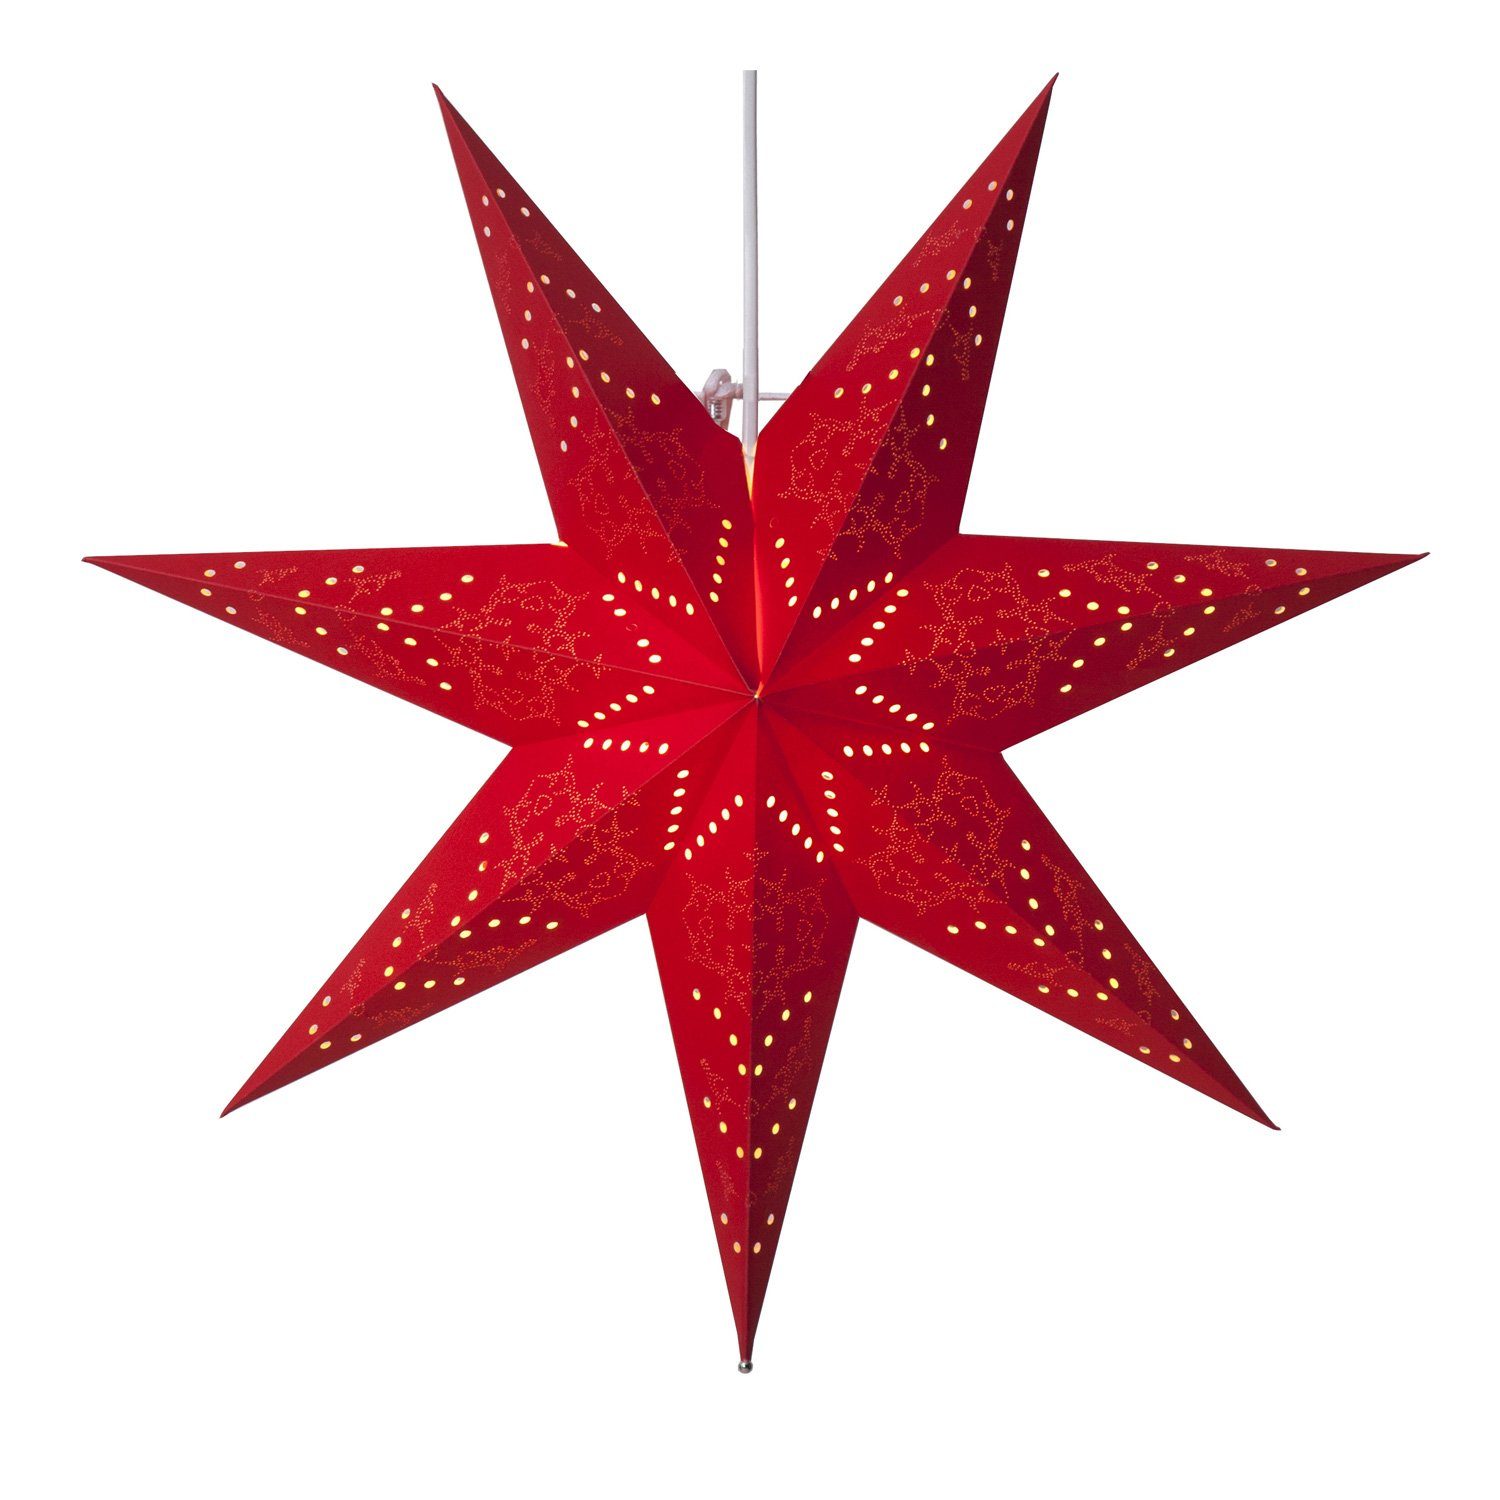 TRADING 51cm Papierstern STAR Leuchtstern Faltstern rot Kabel hängend LED mit 7-zackig Stern